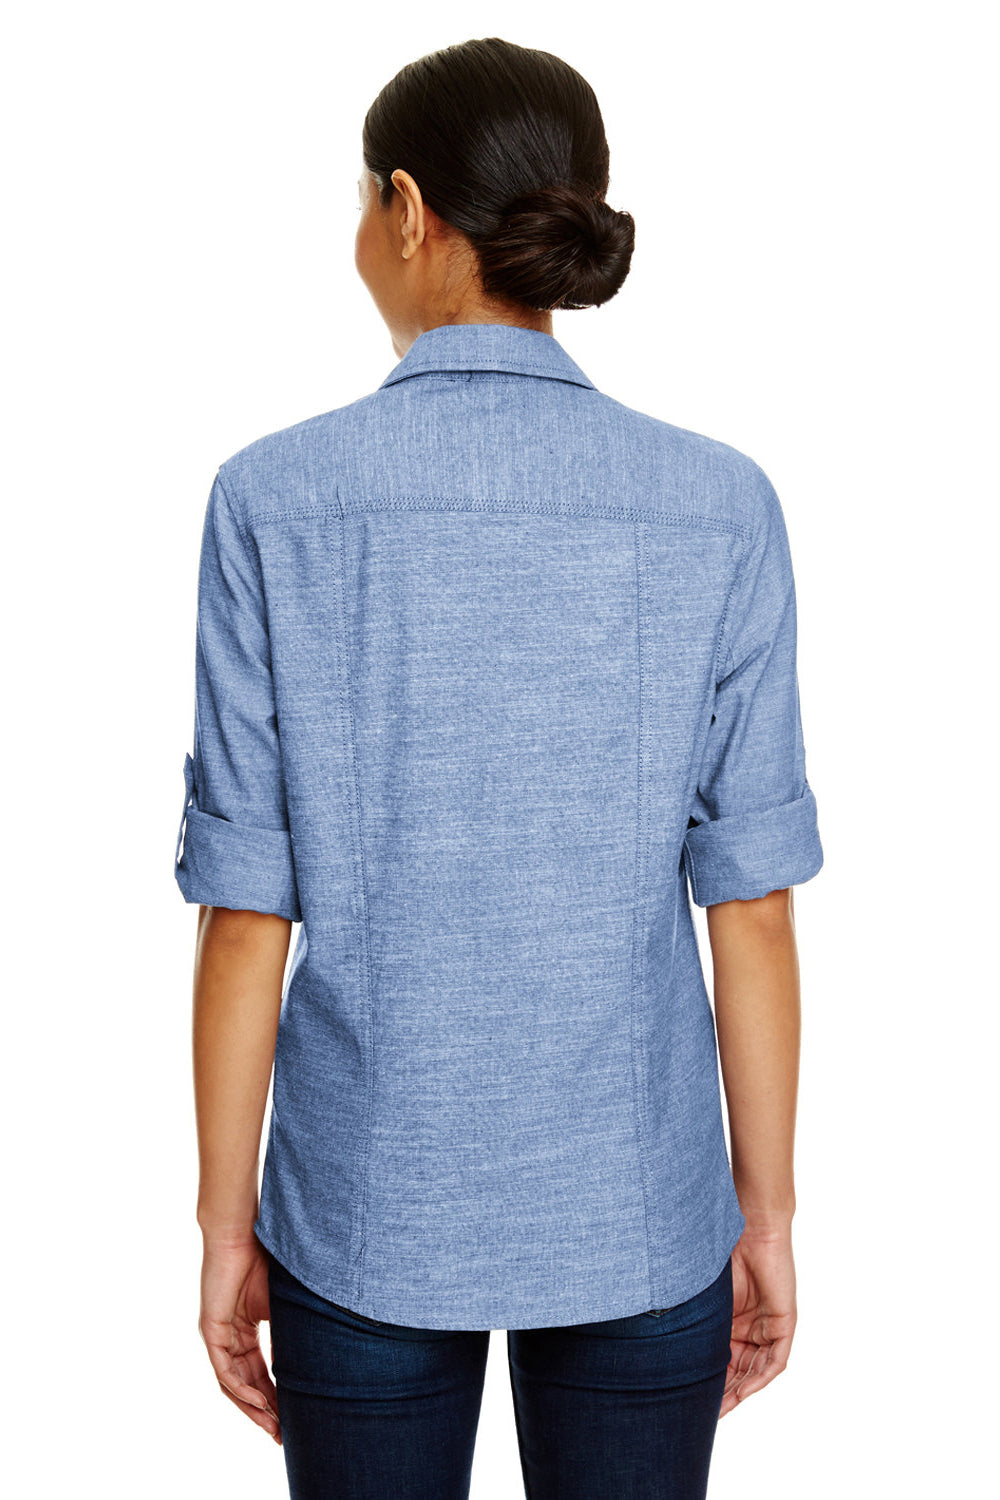 Burnside 5255 Womens Long Sleeve Button Down Shirt w/ Double Pockets Light Denim Model Back